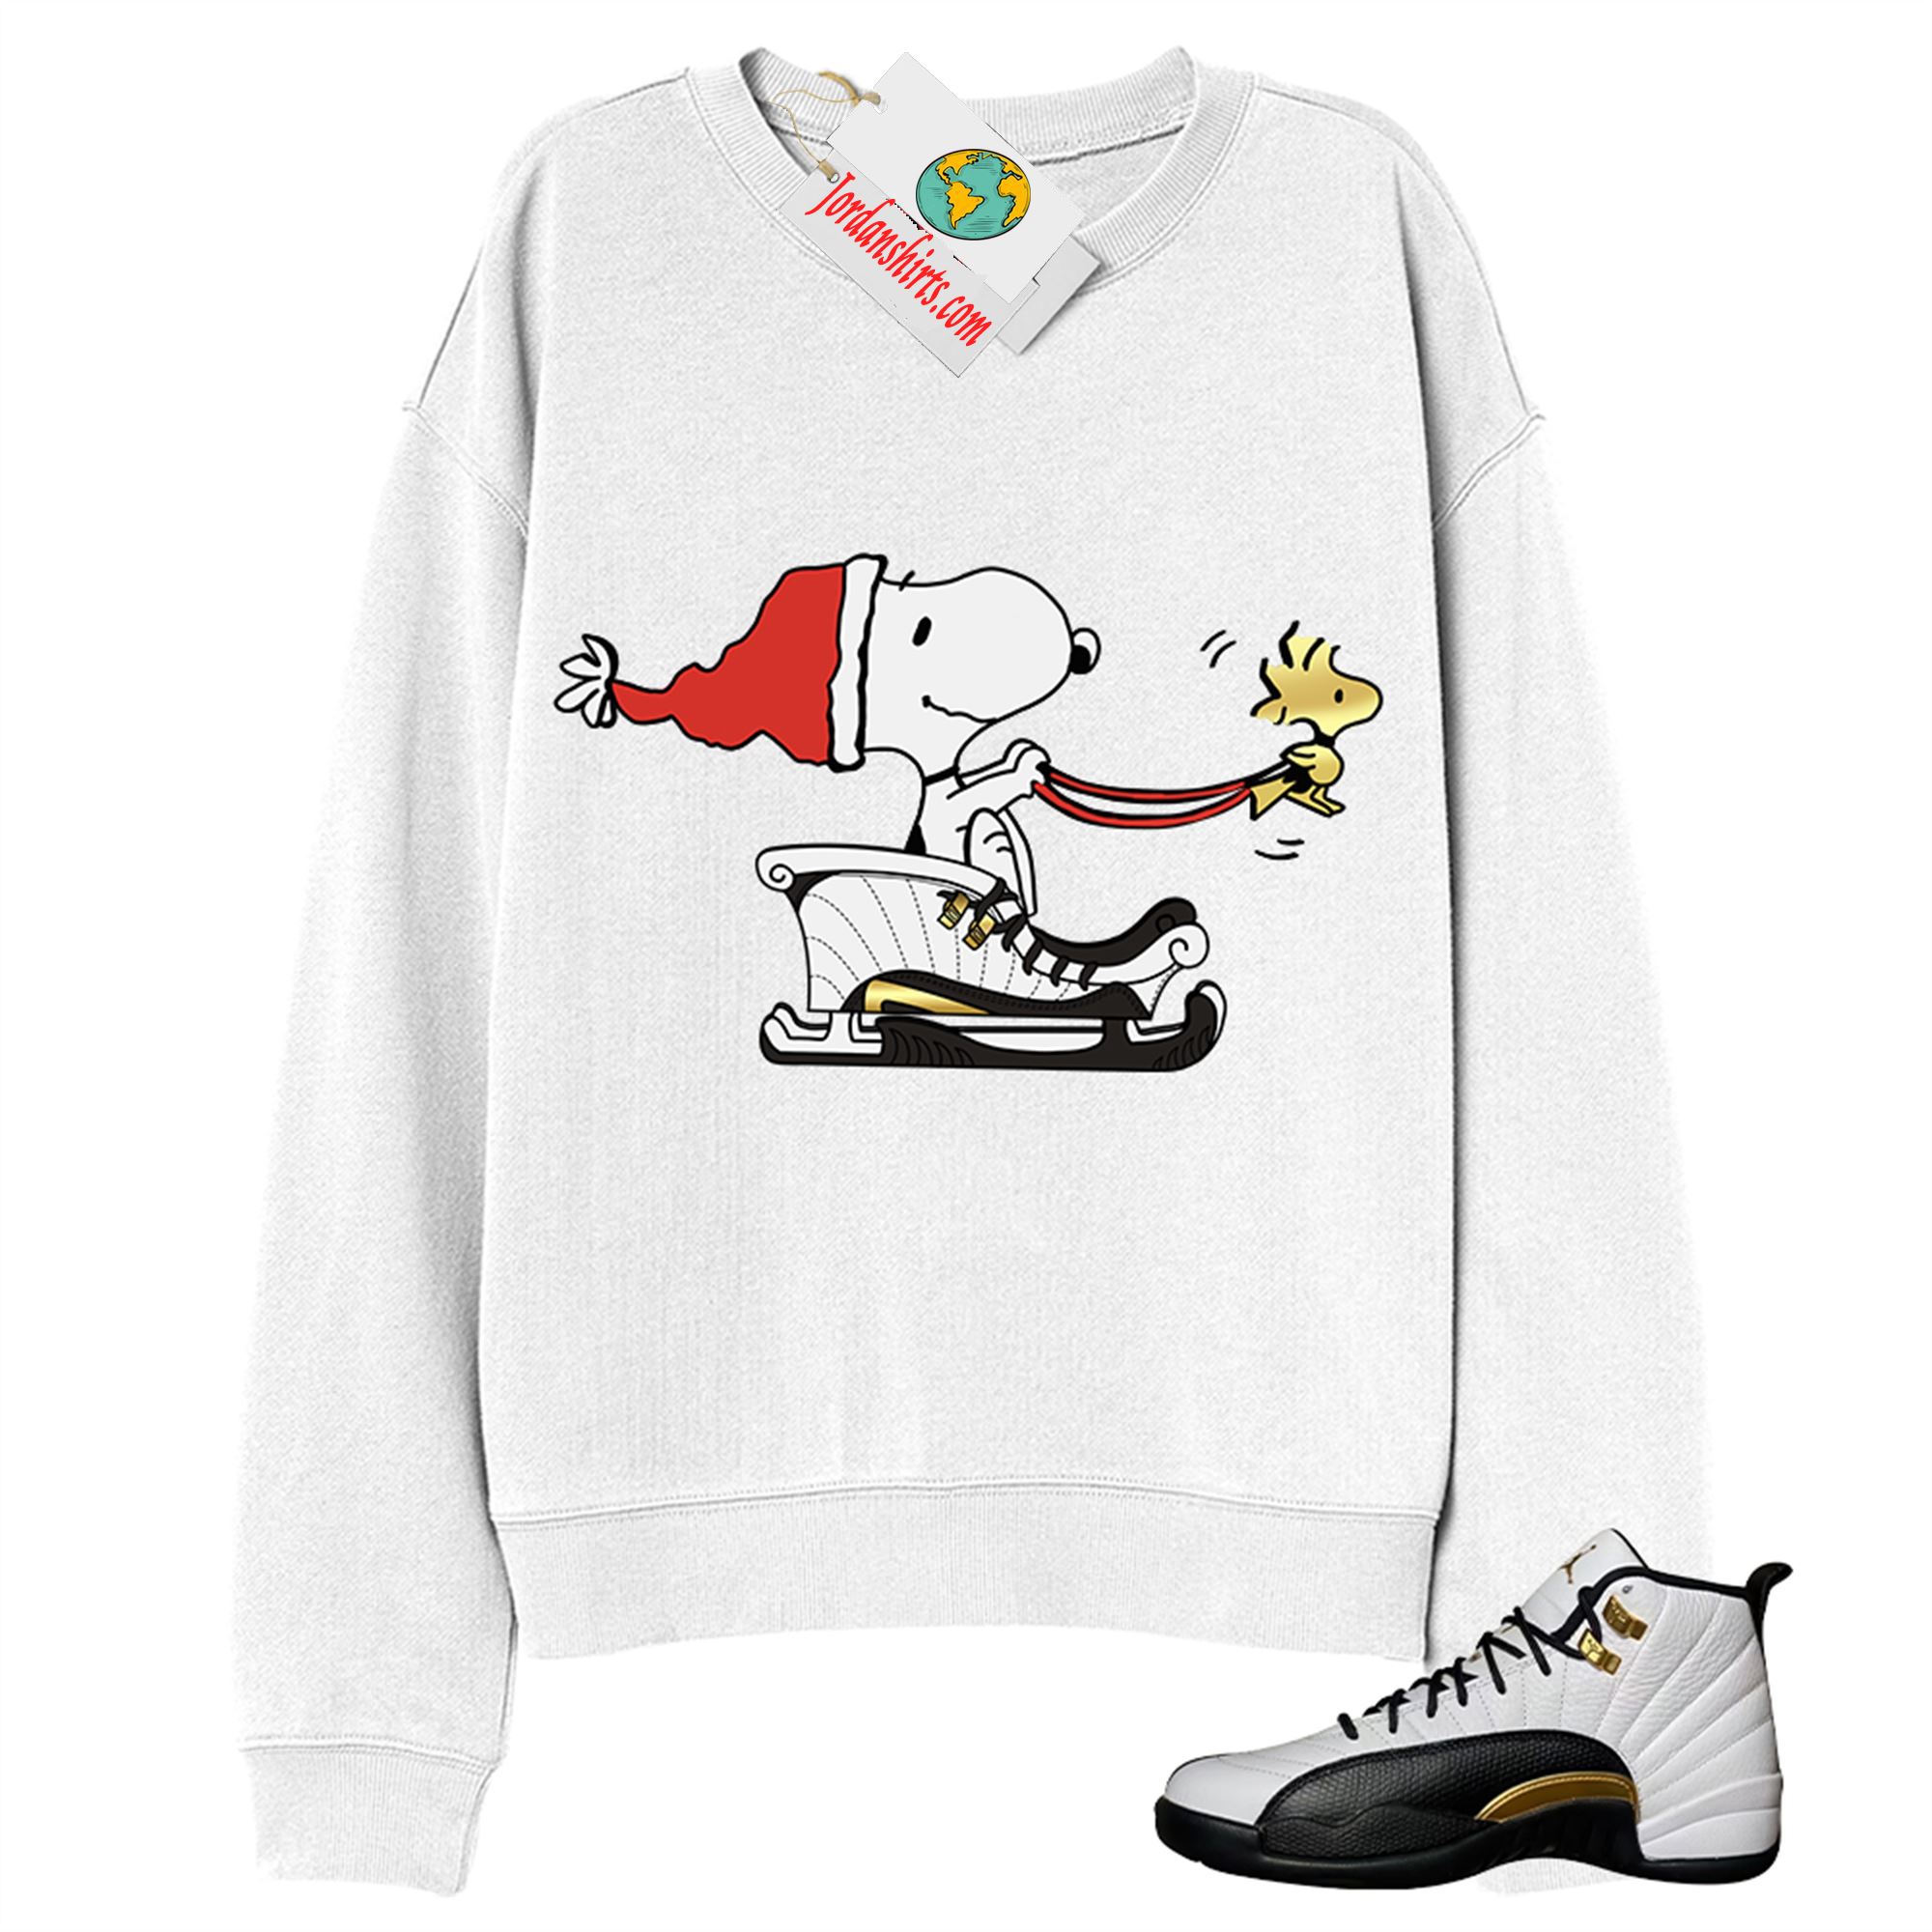 Jordan 12 Sweatshirt, Snoopy Dog Christmas White Sweatshirt Air Jordan 12 Royalty 12s Full Size Up To 5xl